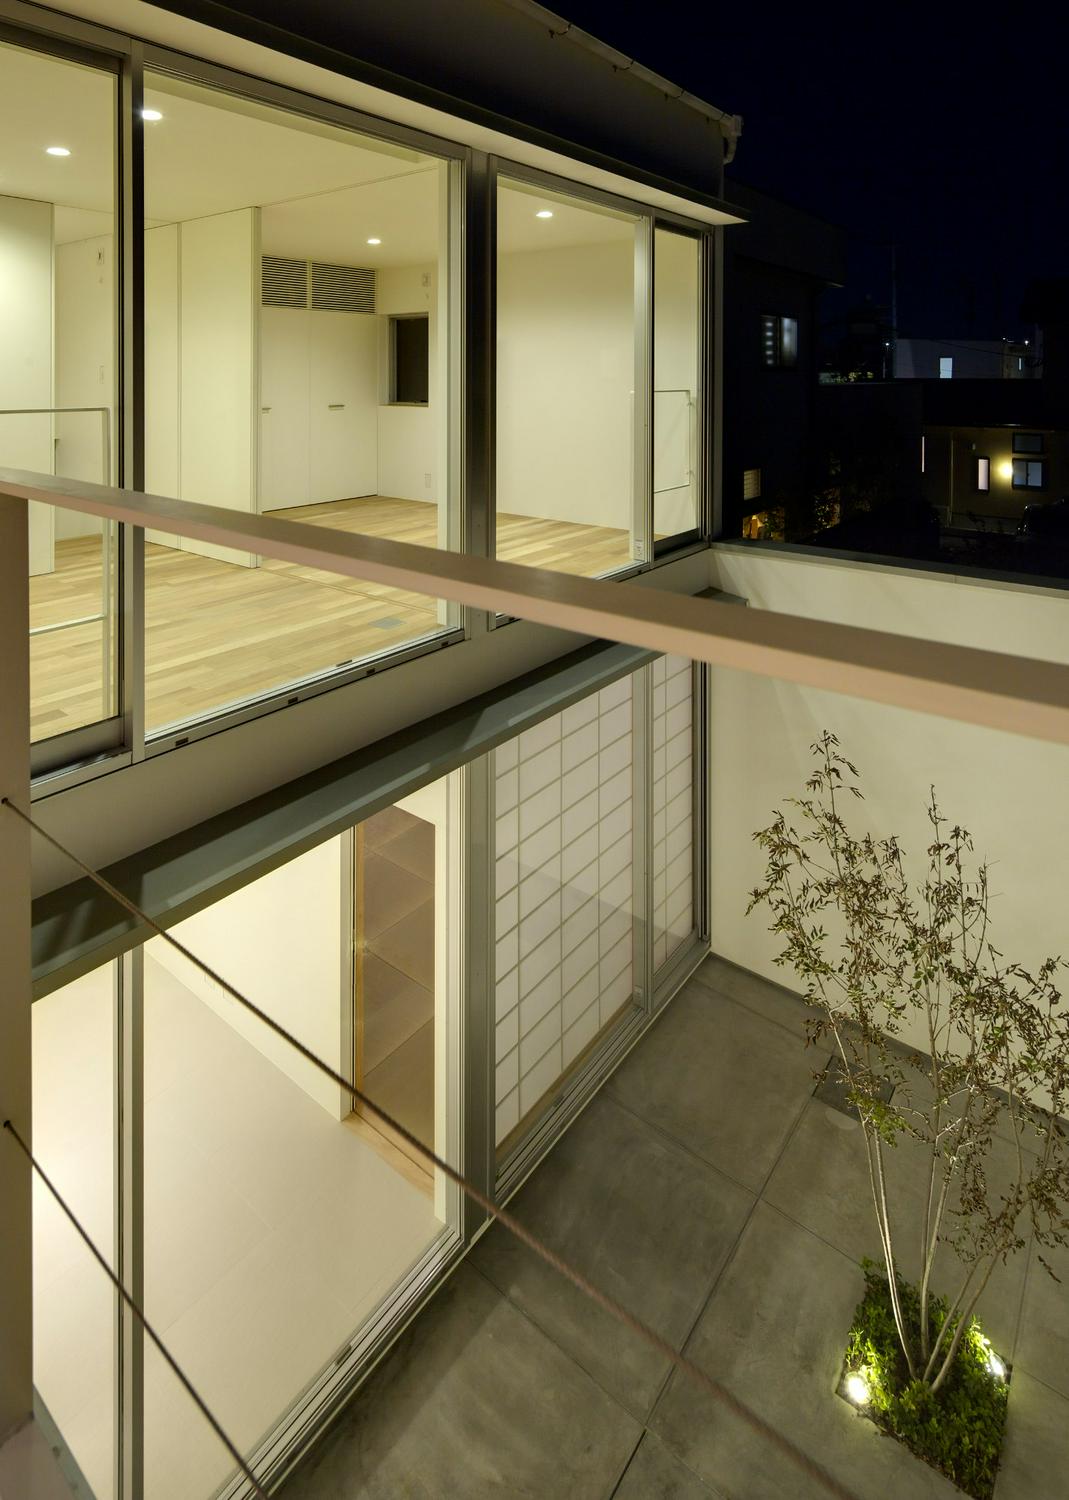 Image of "２ Courts House", the work by architect : Shinji Yoshida ＋ Yoko Sugita (image number 10)